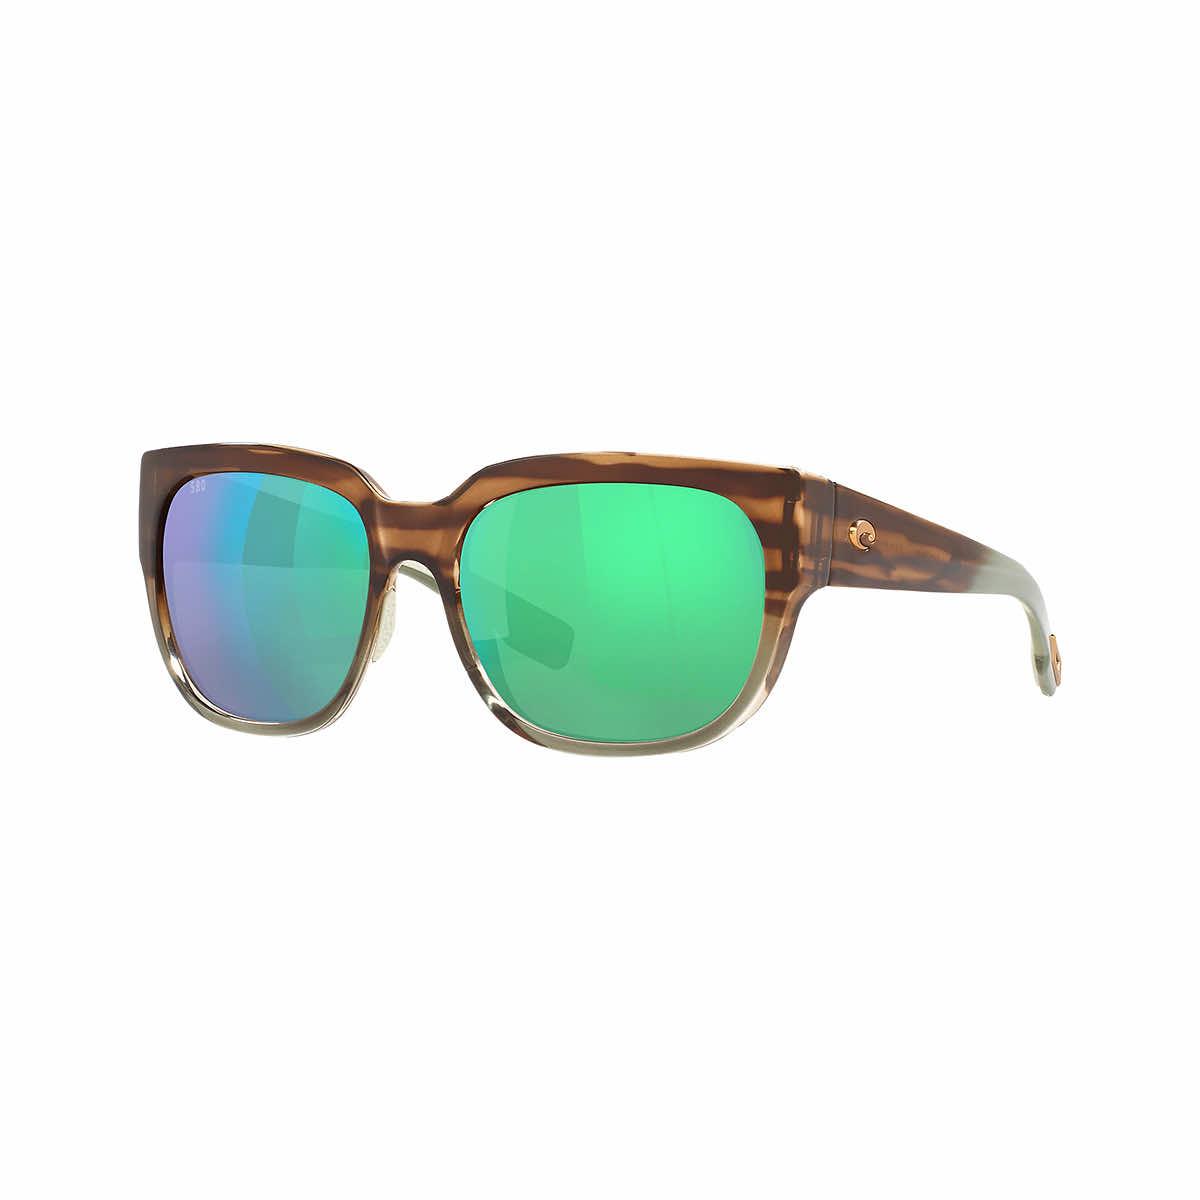  Waterwoman 2 580g Sunglasses - Polarized Glass